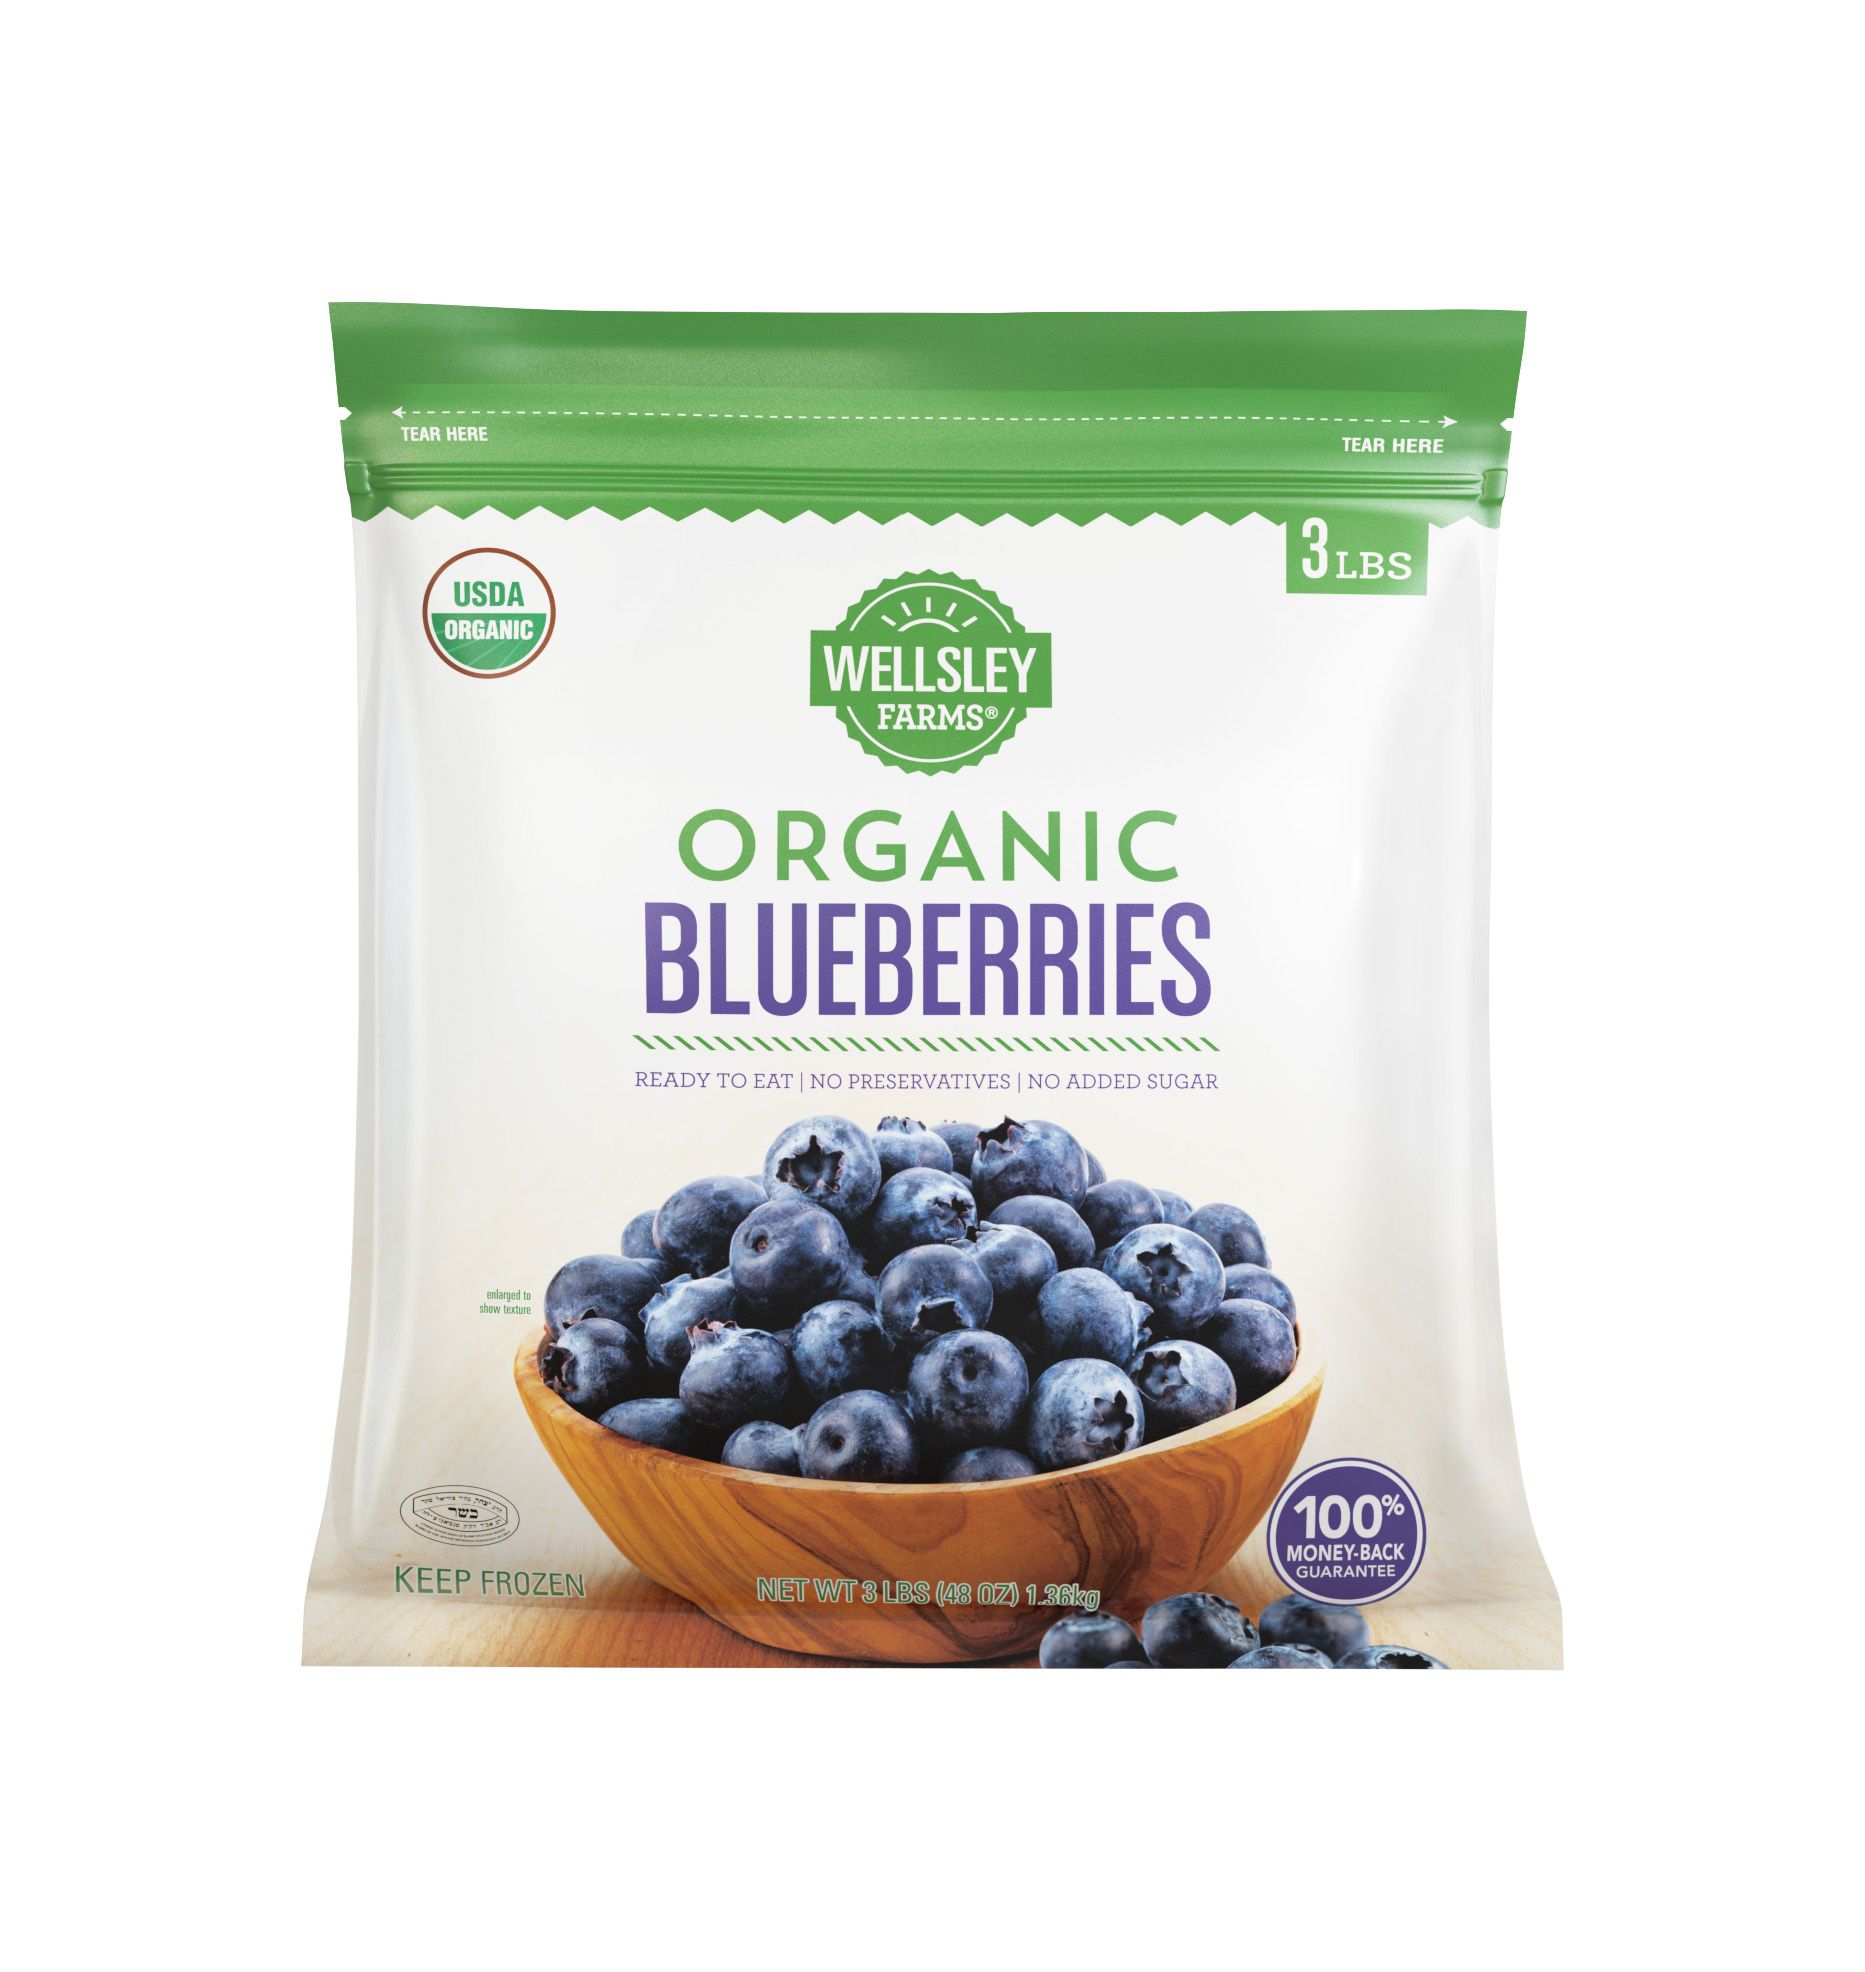 Wellsley Farms Organic Blueberries, 3 lbs.